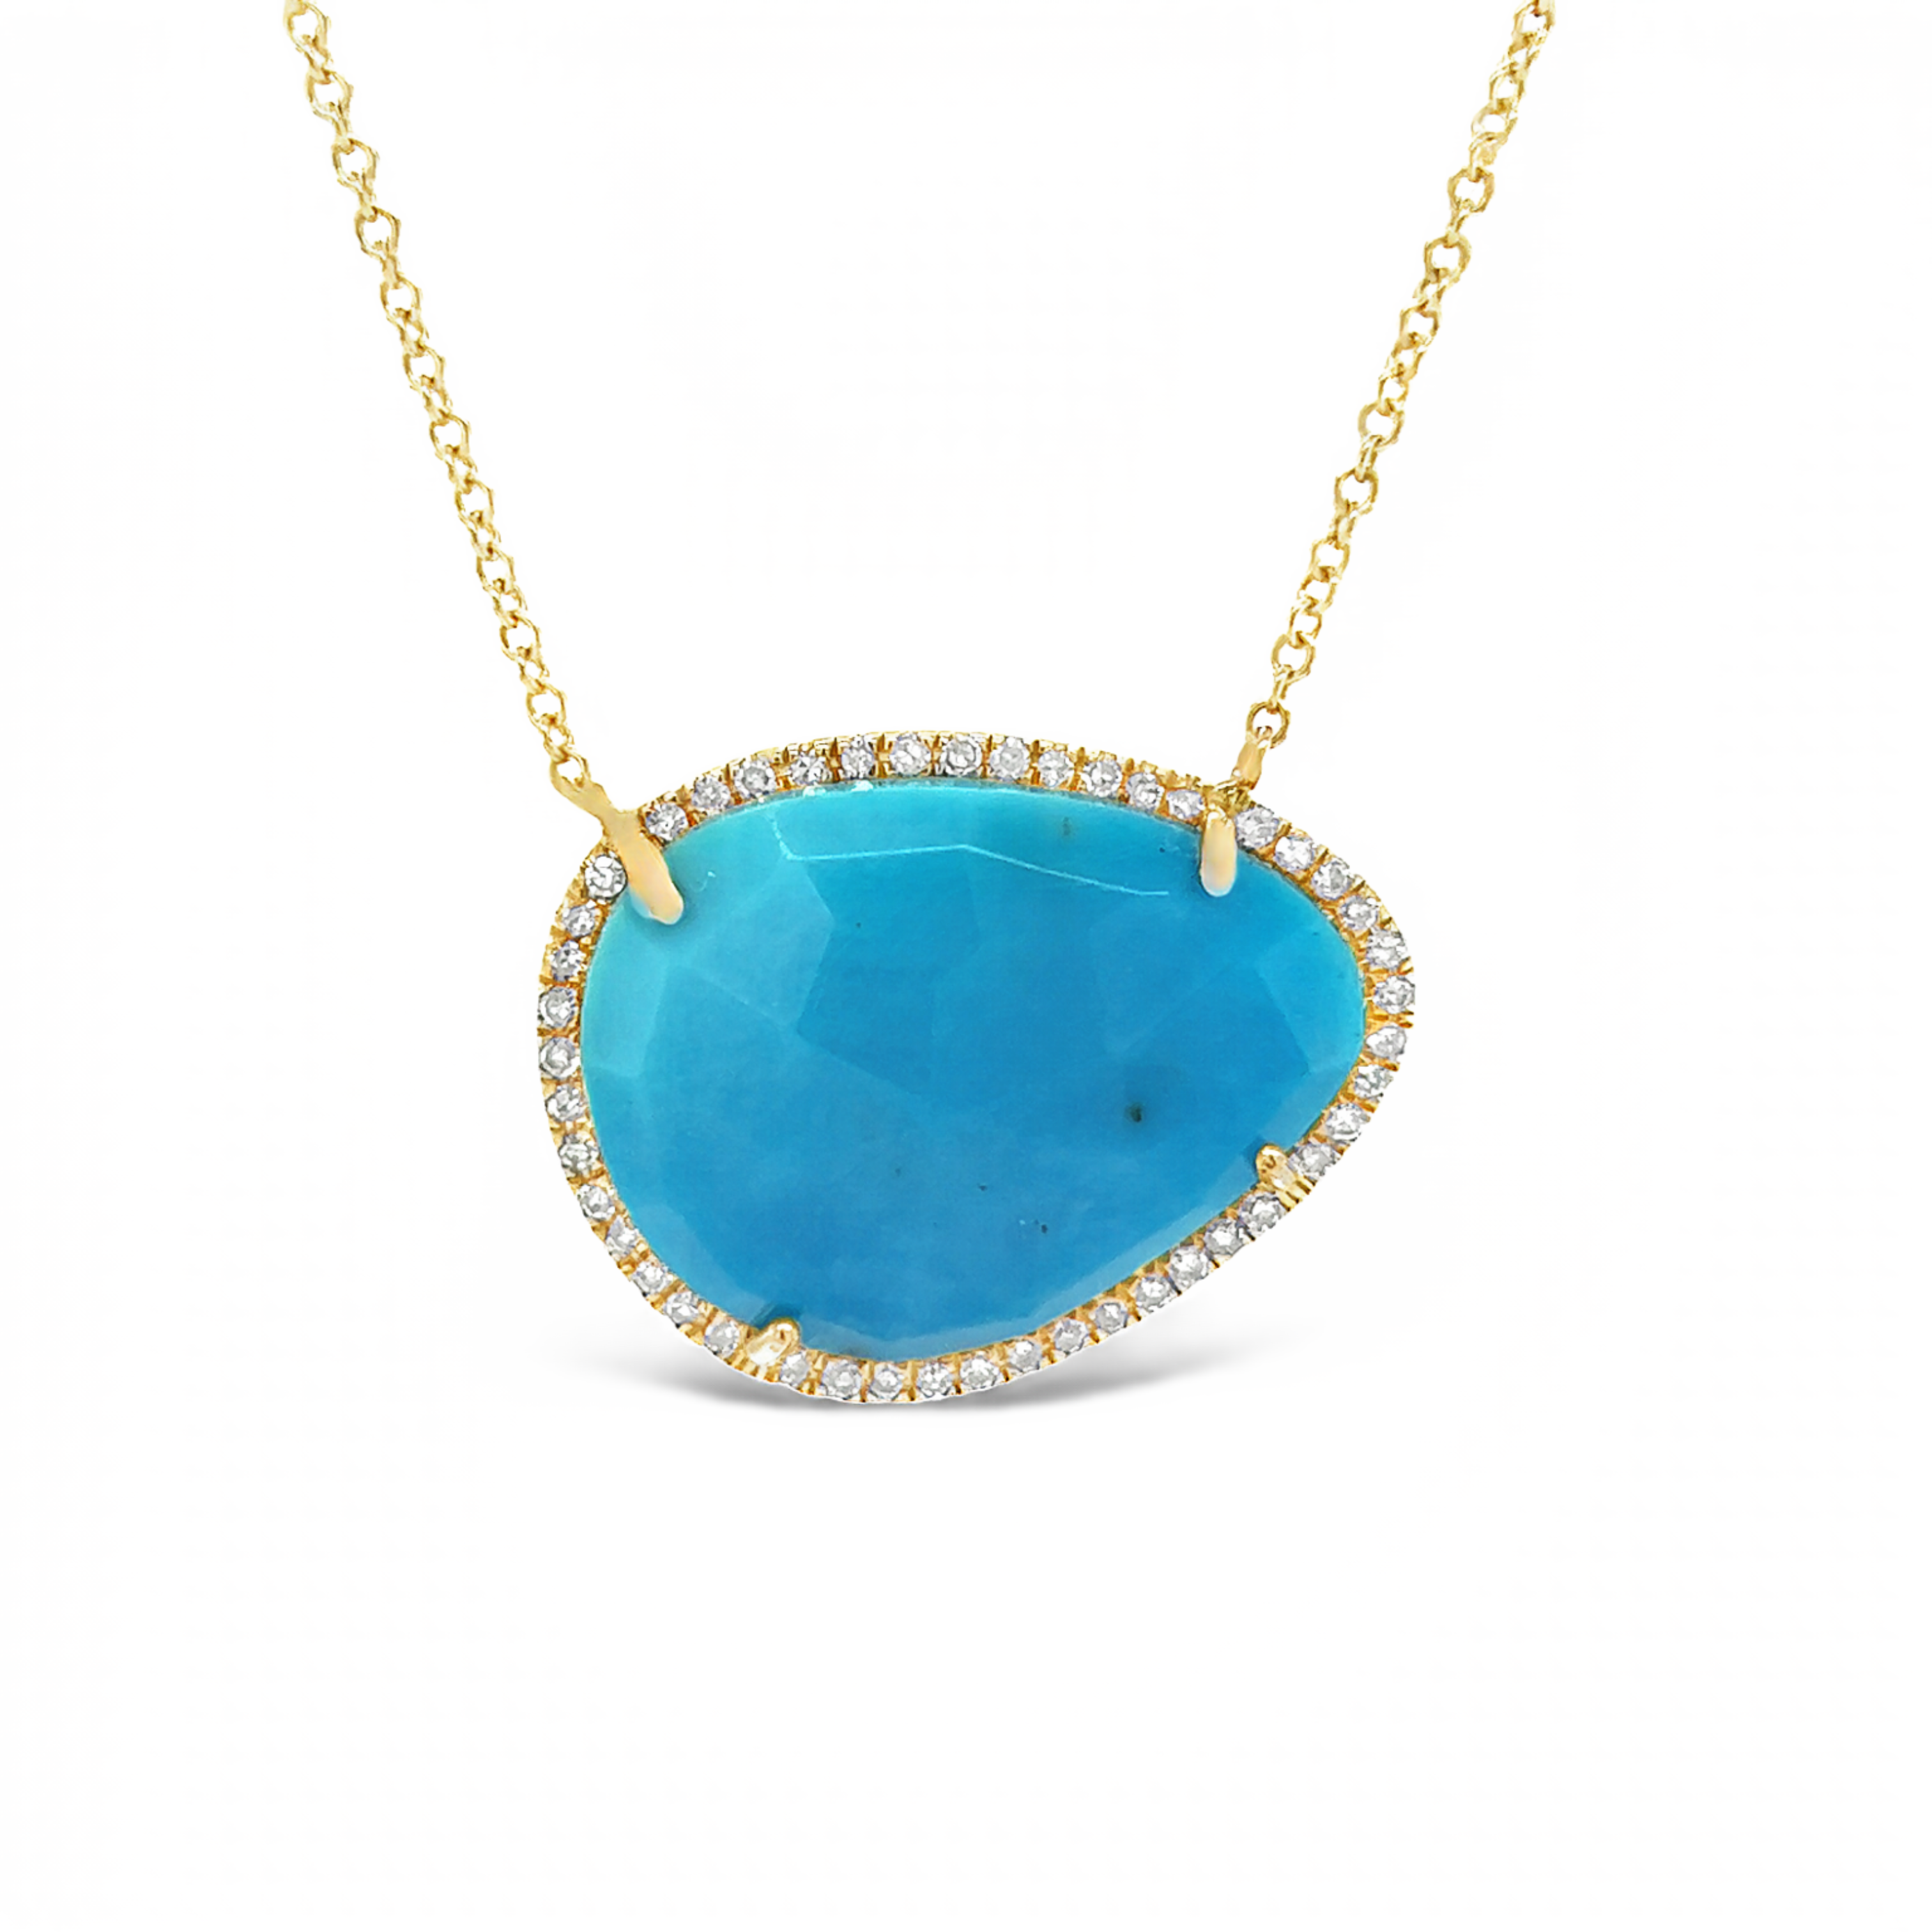 Featured image for “Arizona Turquoise Pendant”